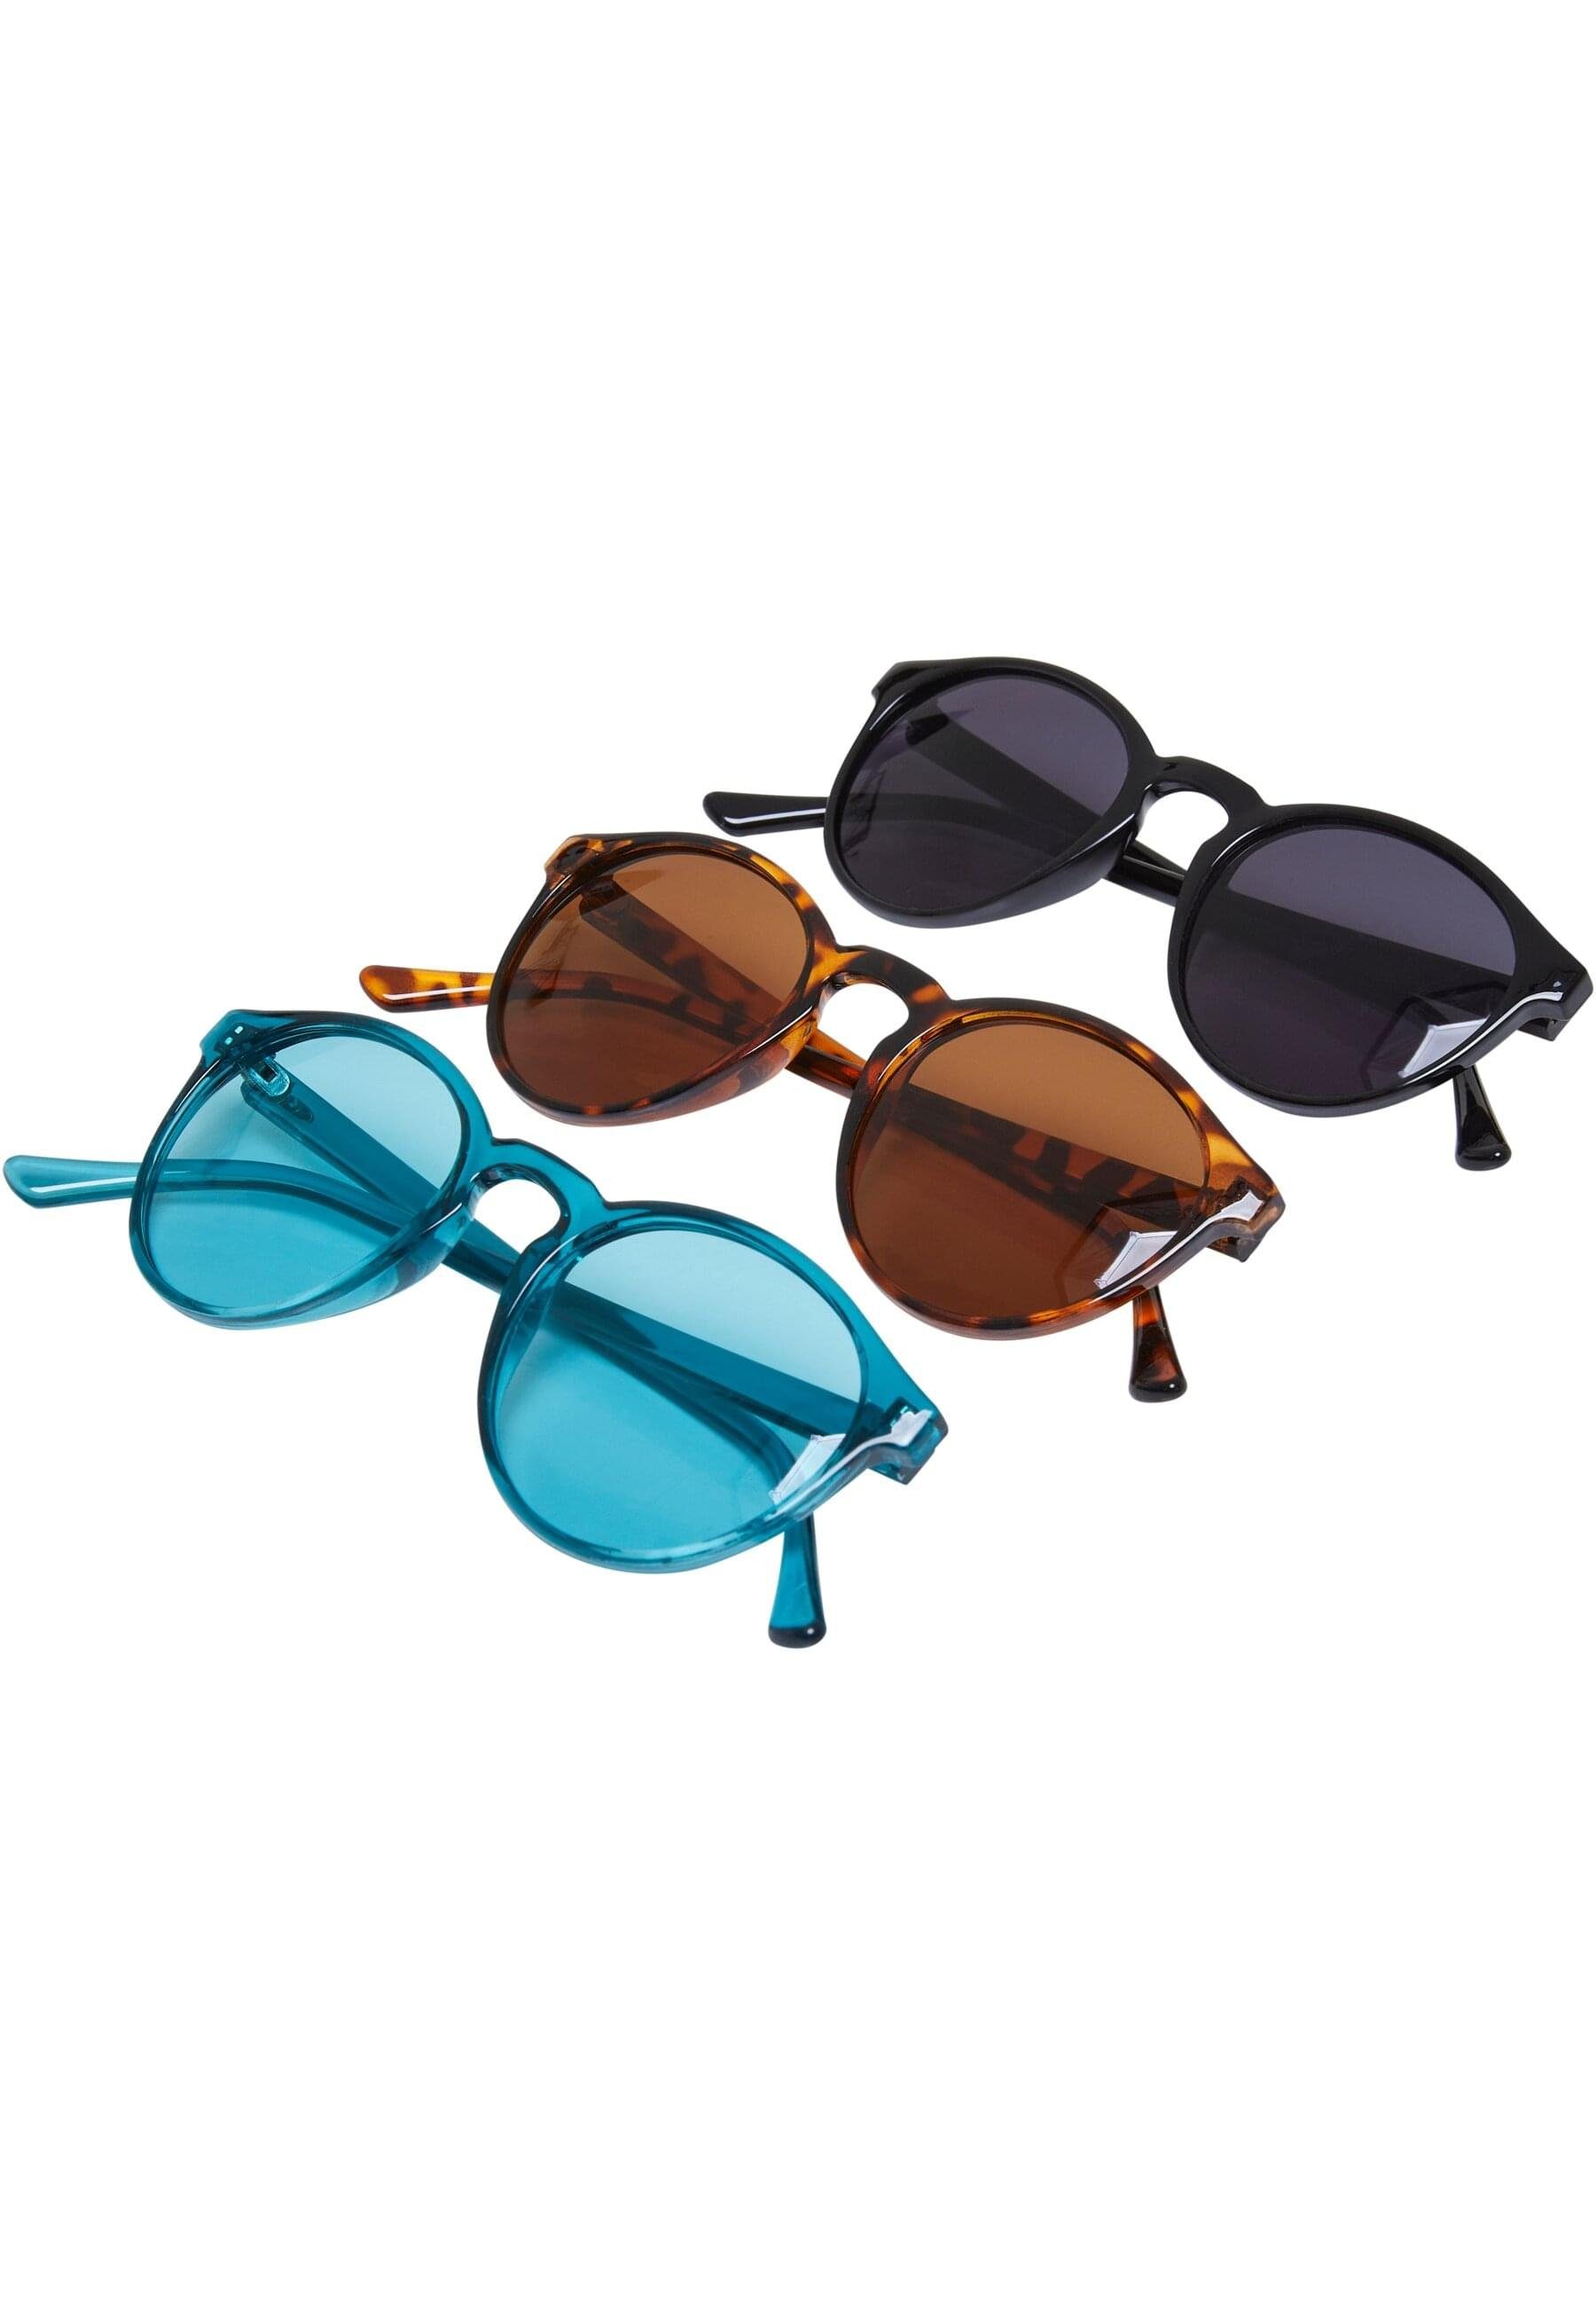 URBAN black/watergreen/amber Sonnenbrille Cypress Sunglasses CLASSICS Unisex 3-Pack